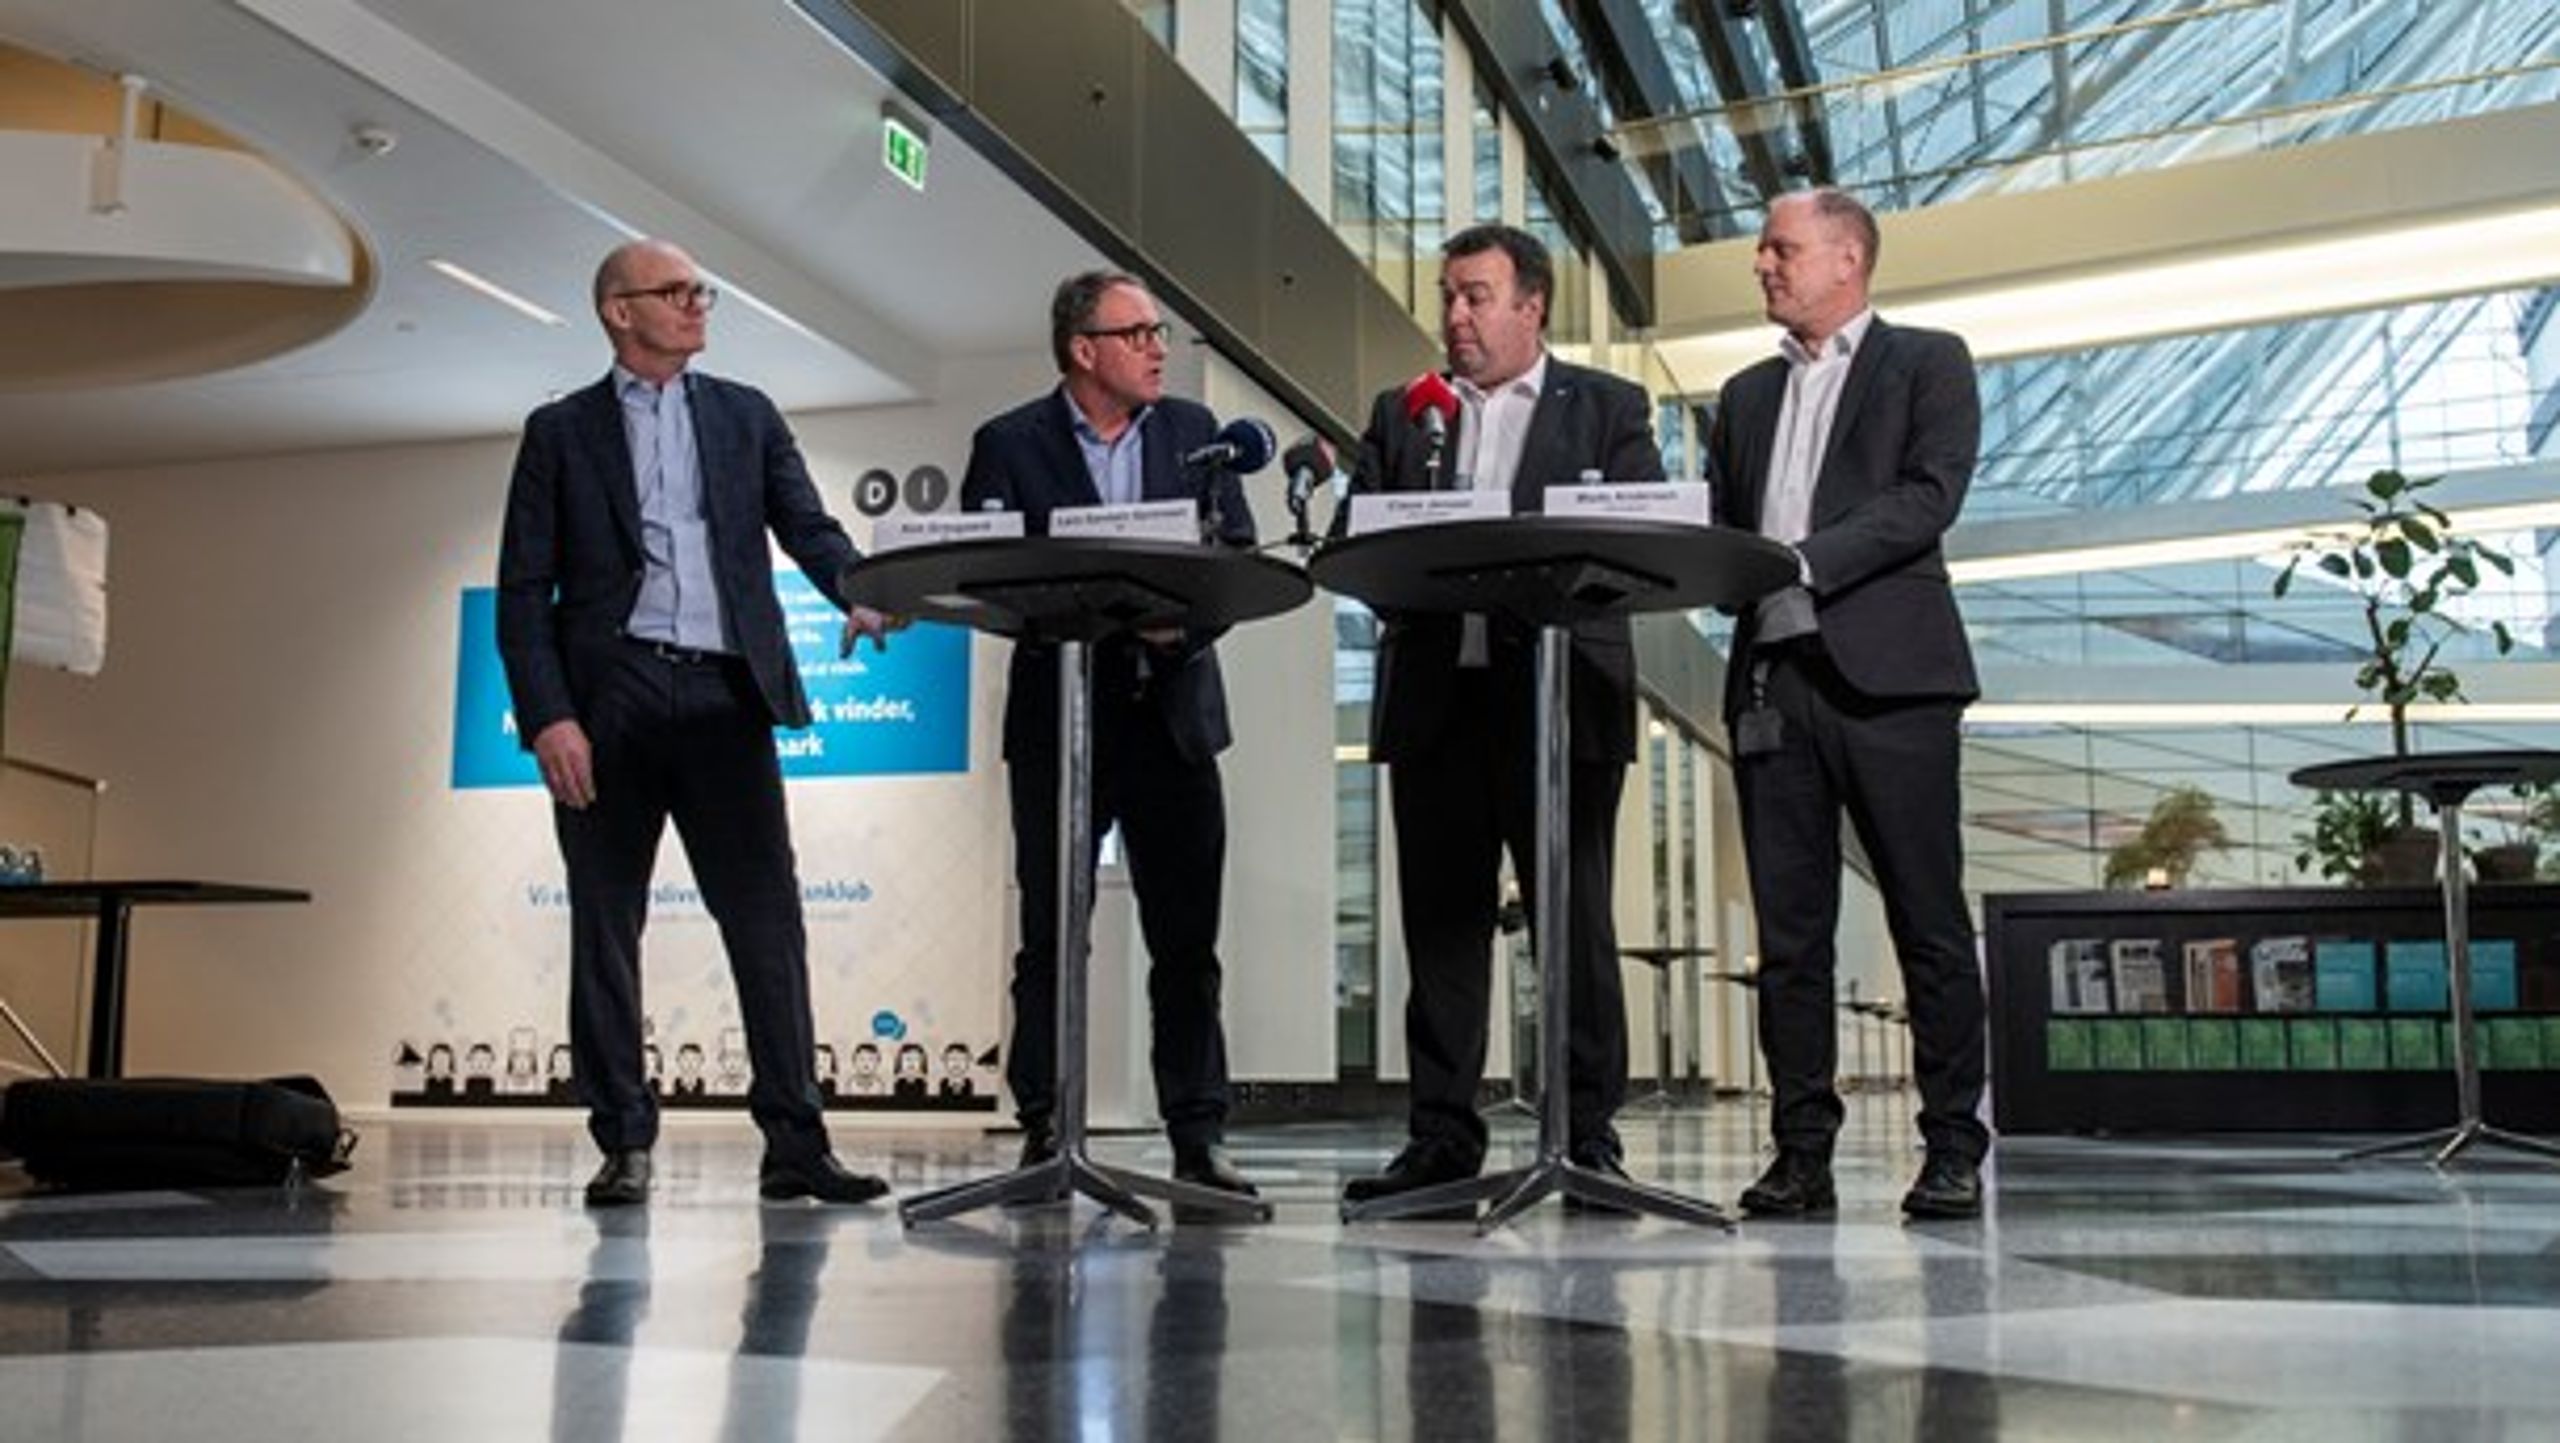 De fire topforhandlere mødtes onsdag i Industriens Hus i København. Fra Venstre:&nbsp;Kim Graugaard, Lars Sandahl Sørensen, Claus Jensen og Mads Andersen.&nbsp;